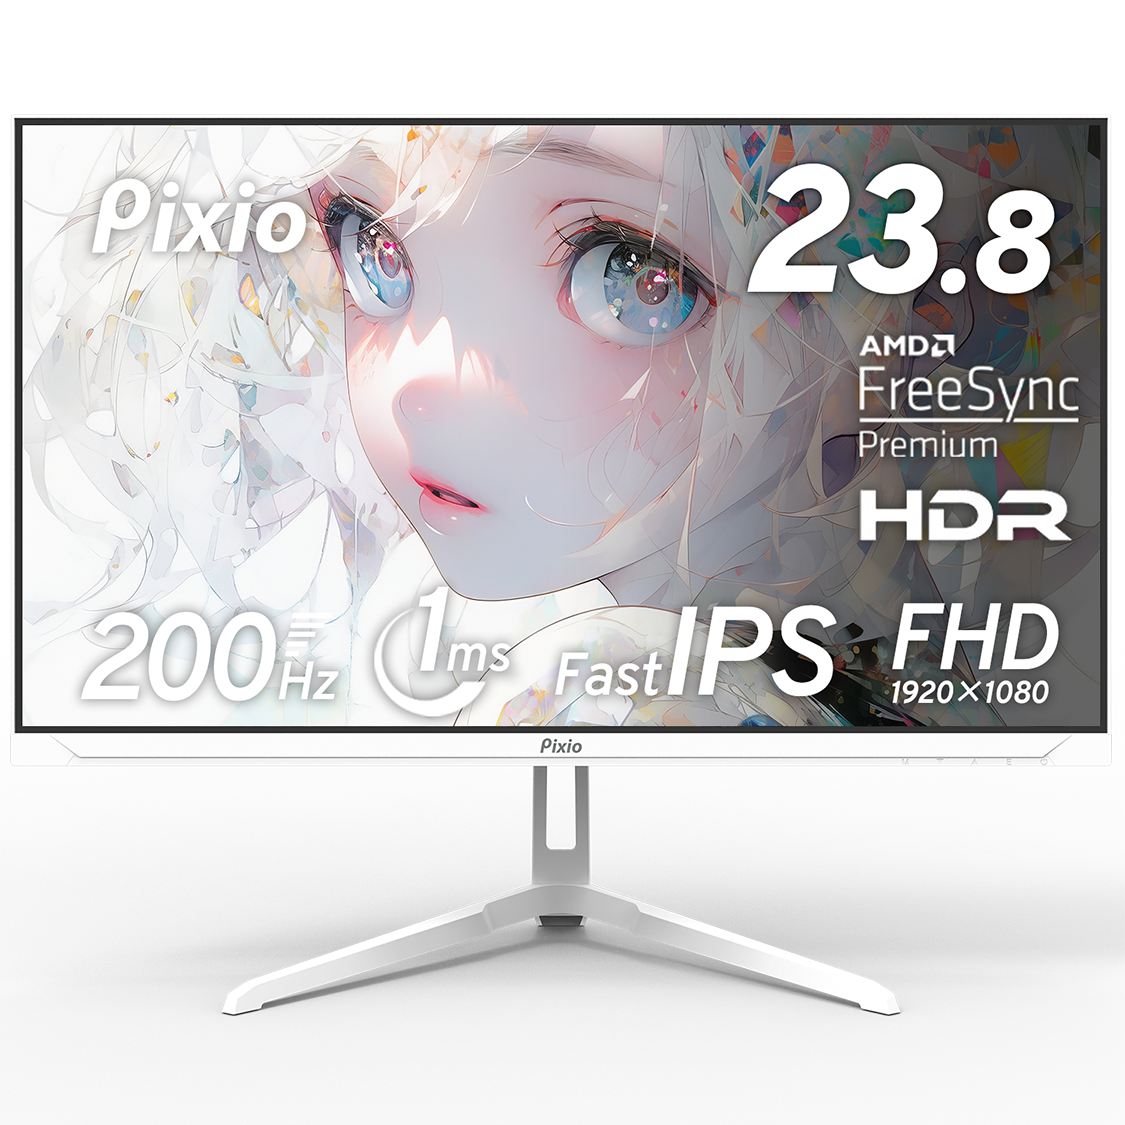 PX248 Wave White | 23.8インチ 200Hz FHD FastIPS | Pixio（ピクシオ 